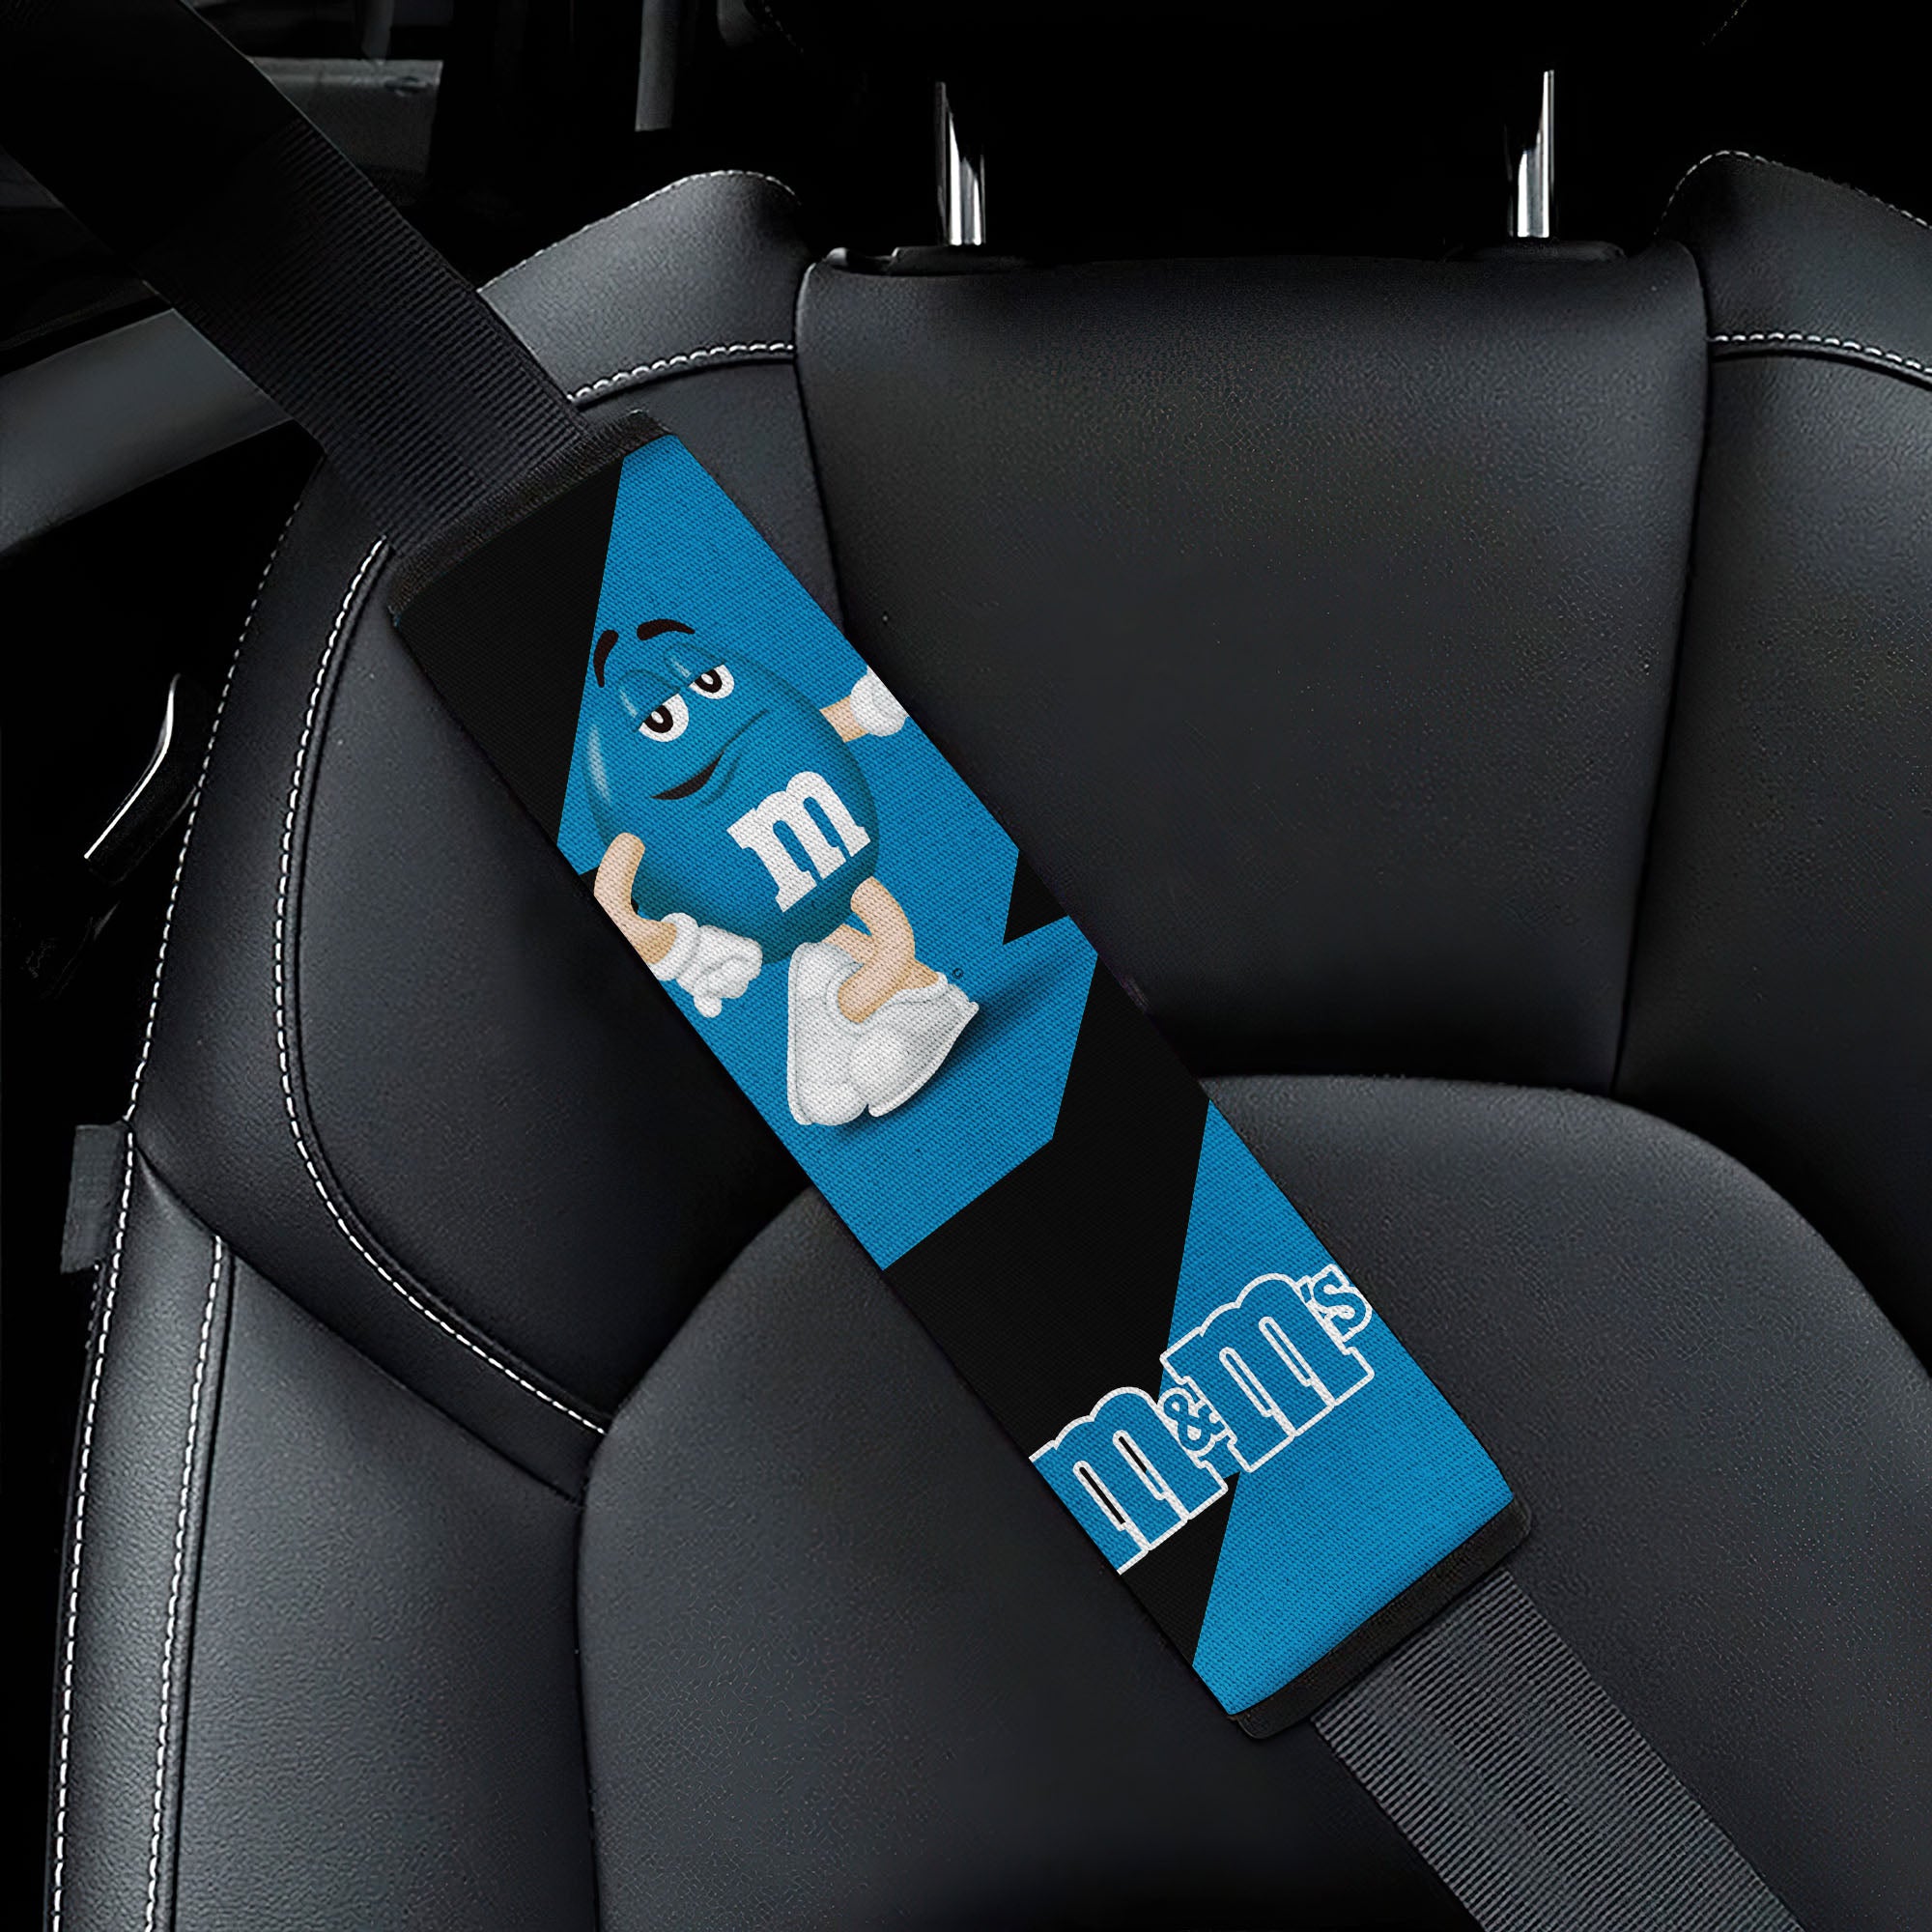 M&M's Candy Ice Cream Cones Chocolate Blue car seat belt covers Custom Car Accessories